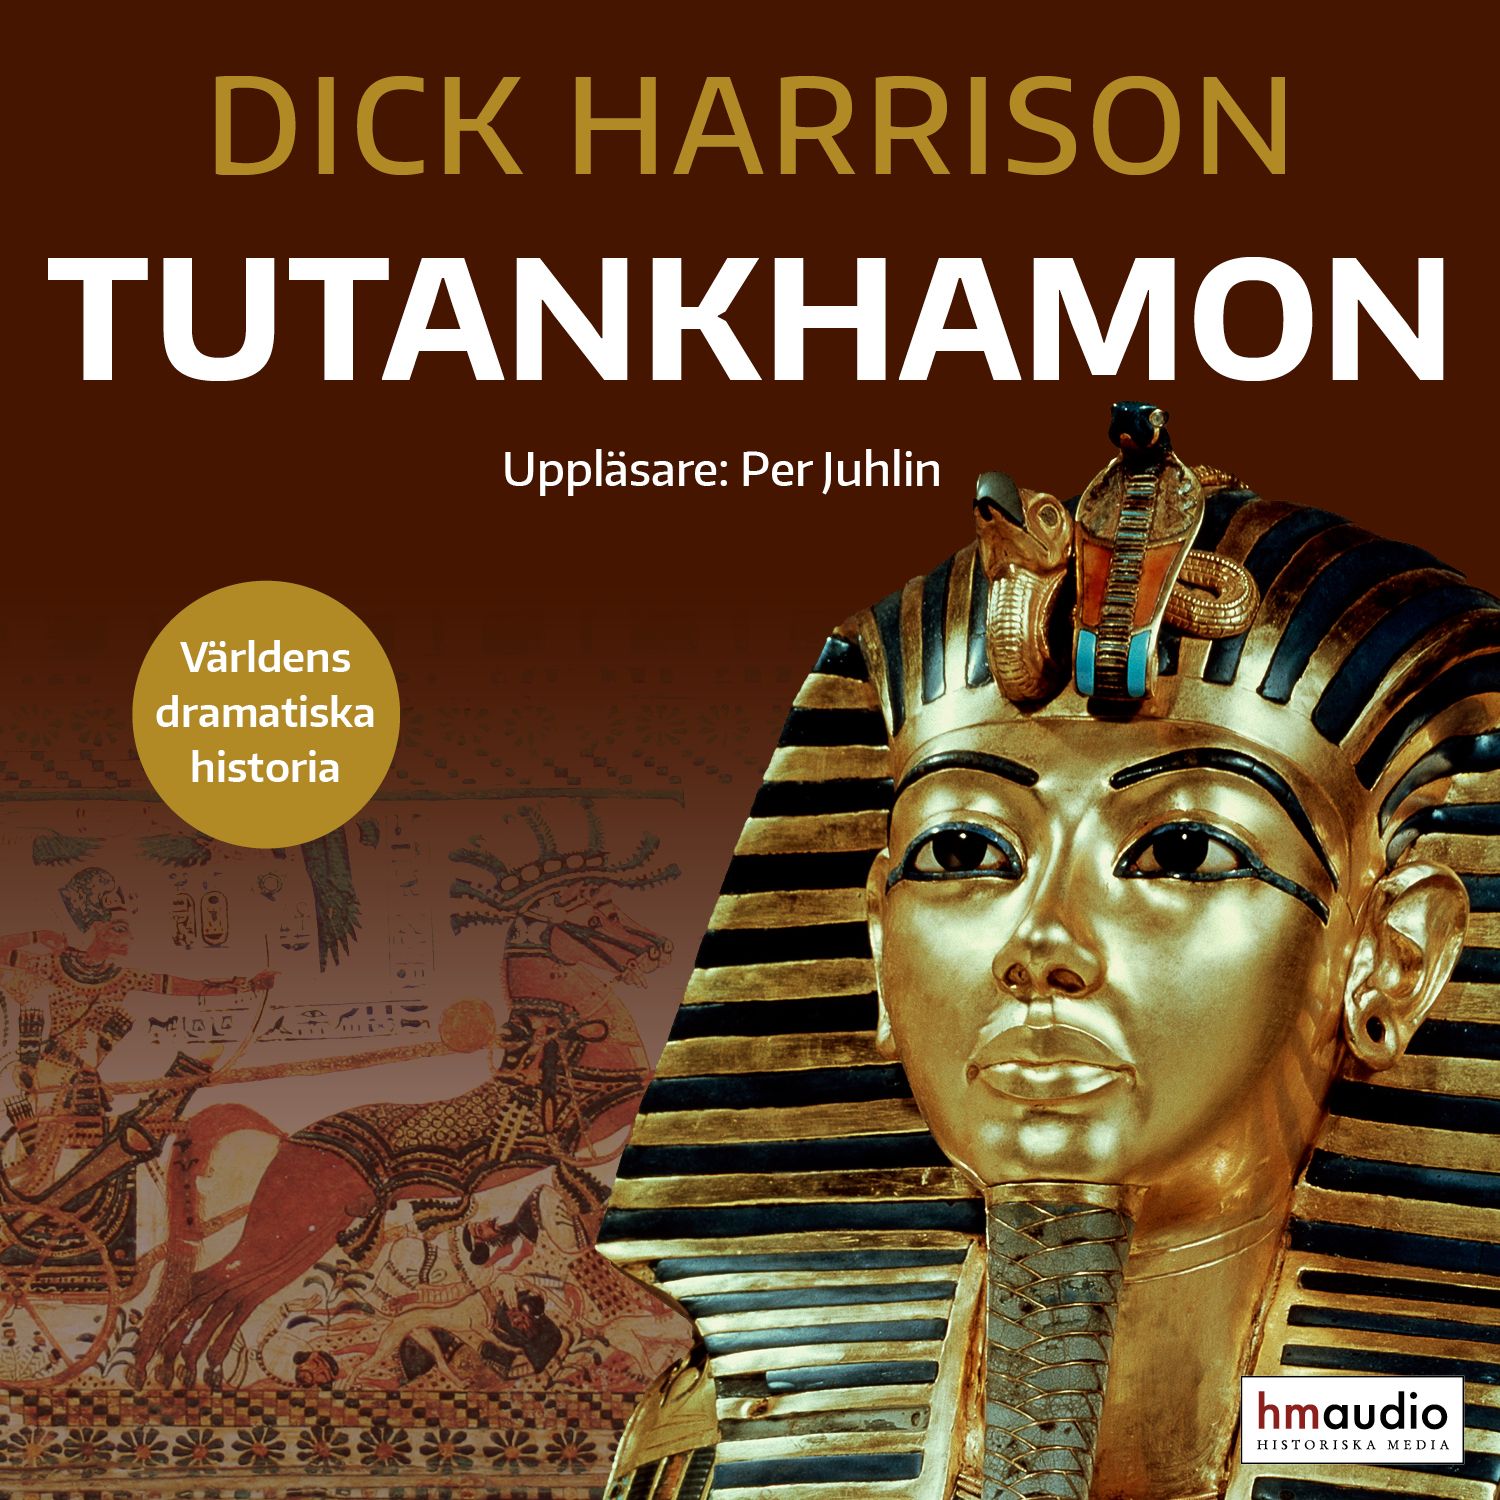 Tutankhamon, lydbog af Dick Harrison